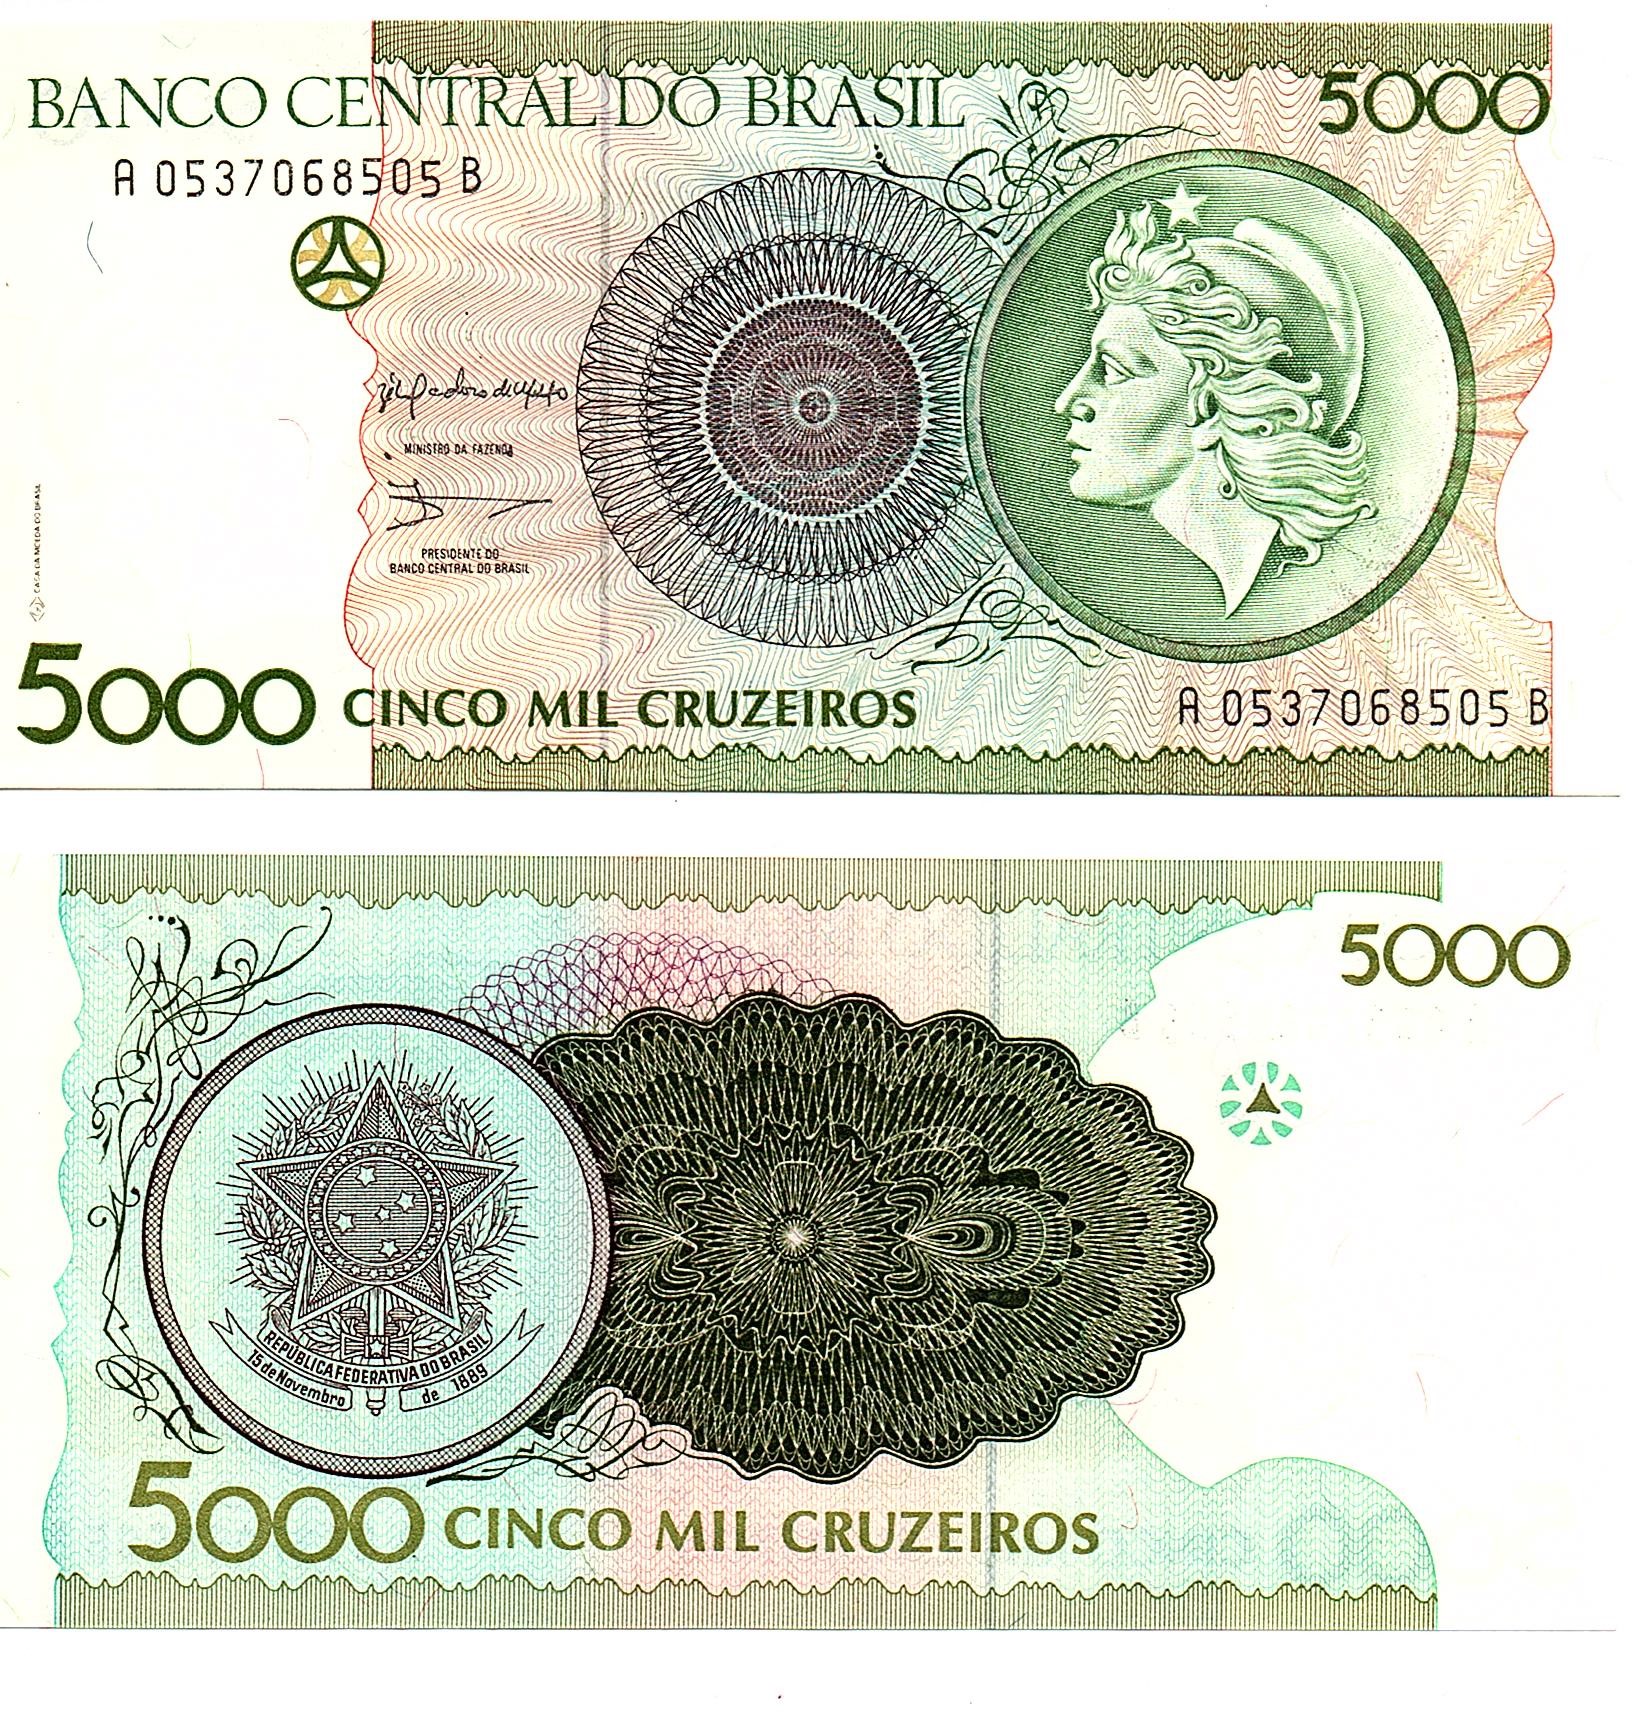 Brazil 5 Cruzeiros - Banknote - Uncirculated - Paper Money